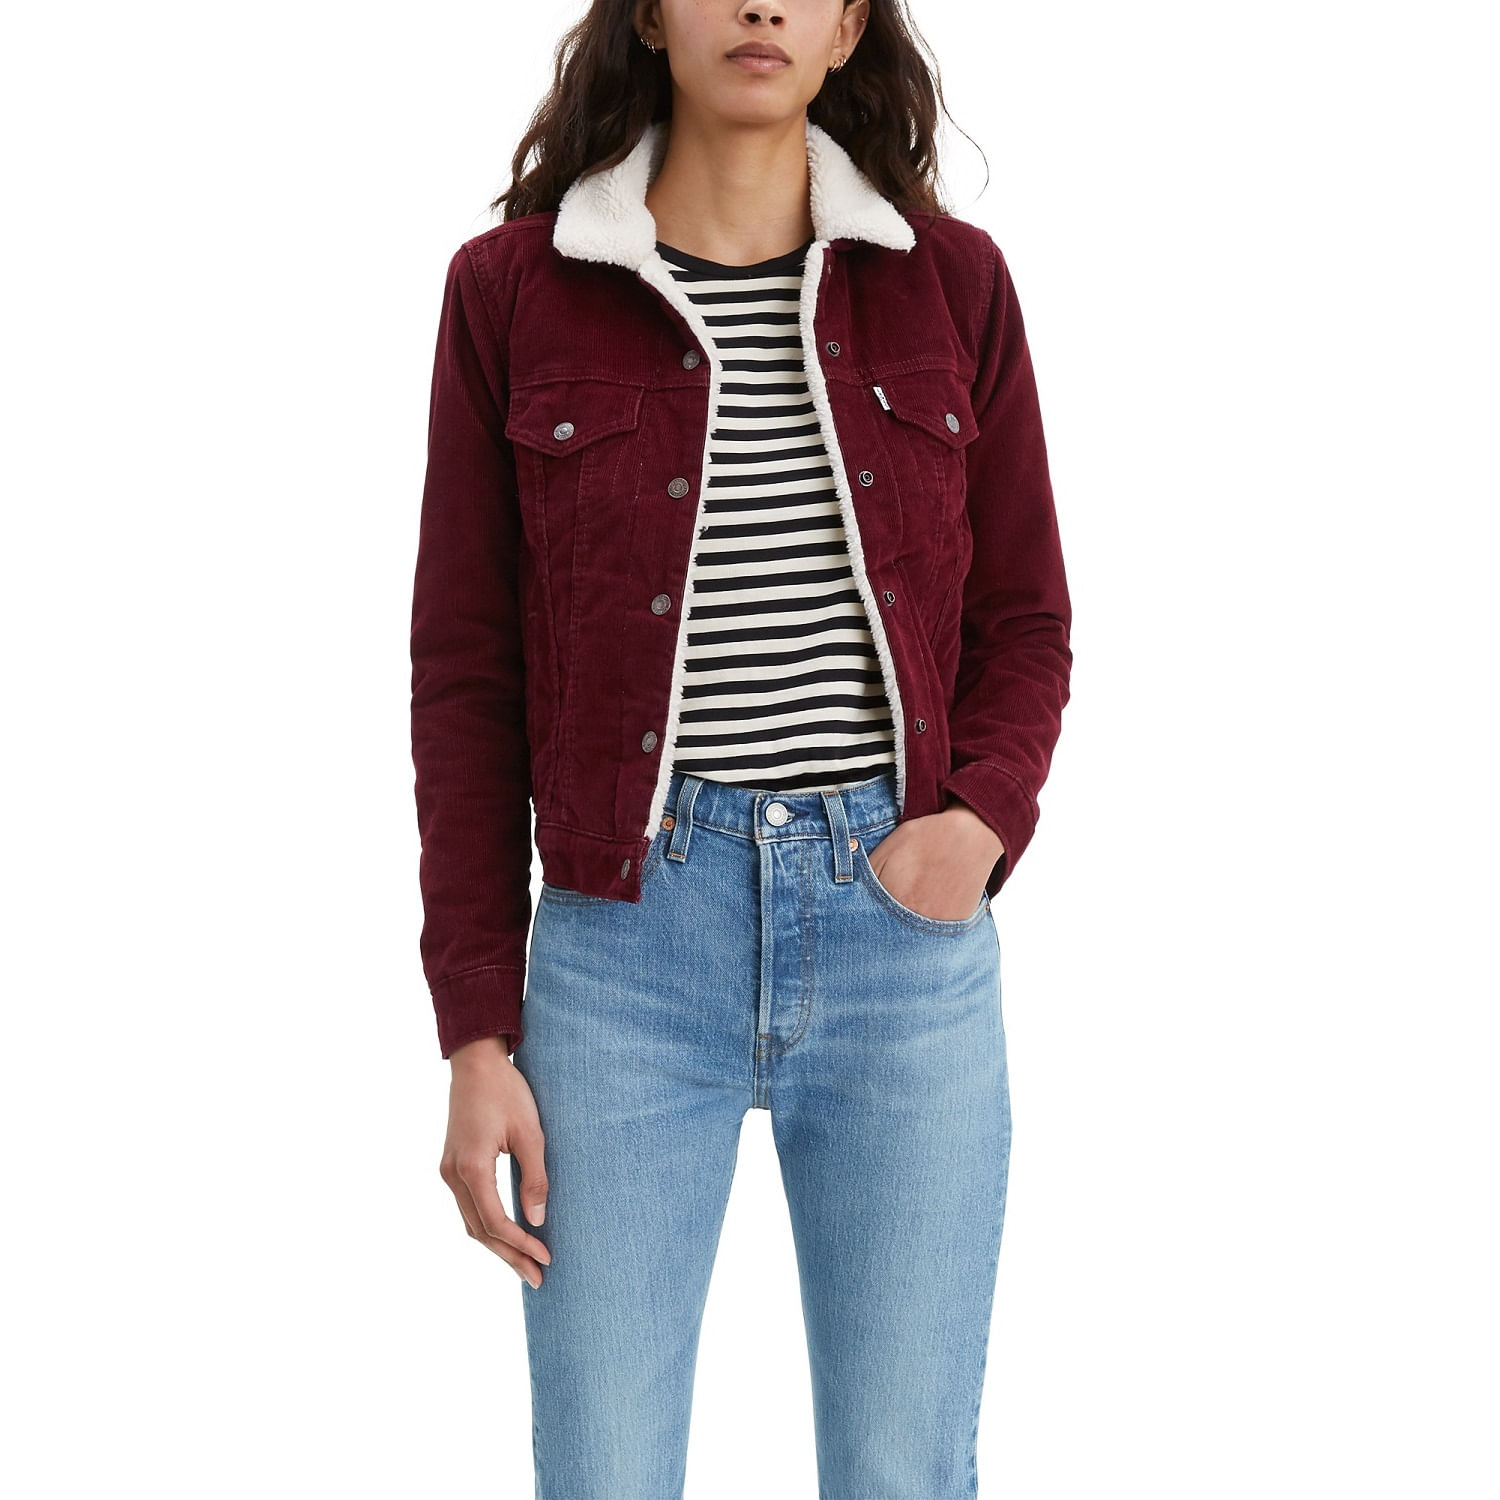 jaqueta jeans feminina levis preço